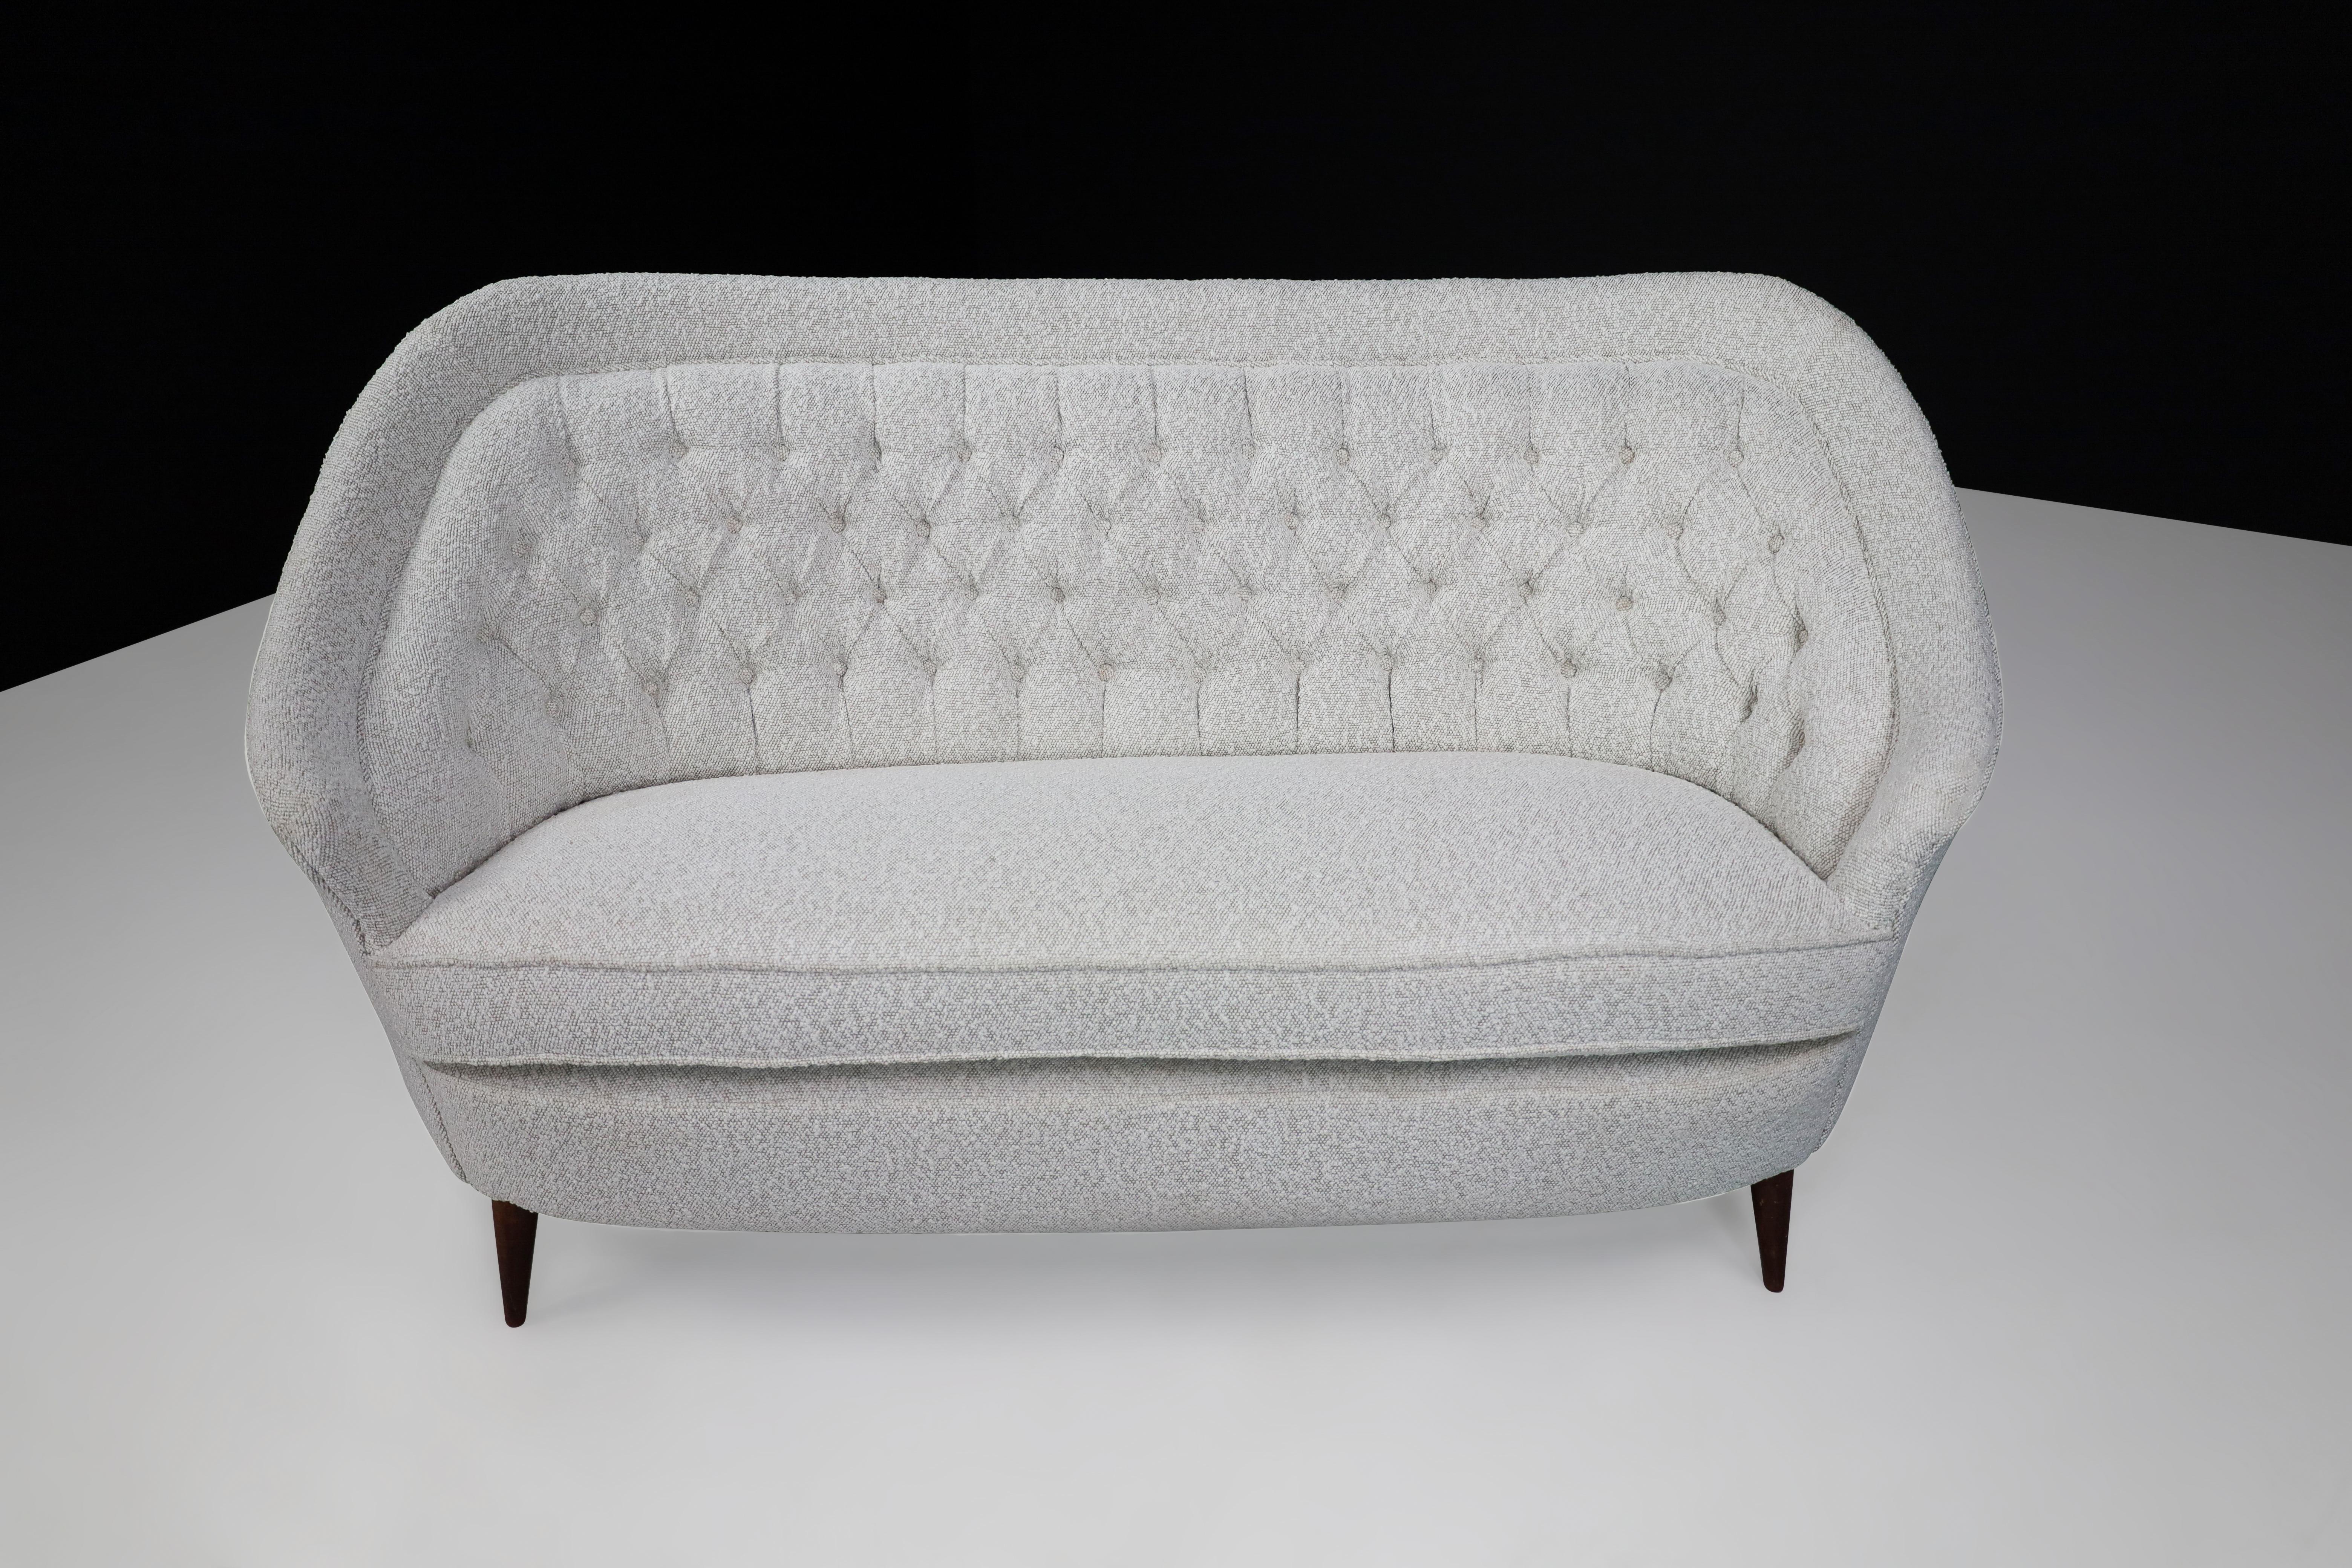 Gio Ponti for Casa E Giardino Midcentury Sofa in Bouclé Upholstery Italy 1940s  For Sale 2